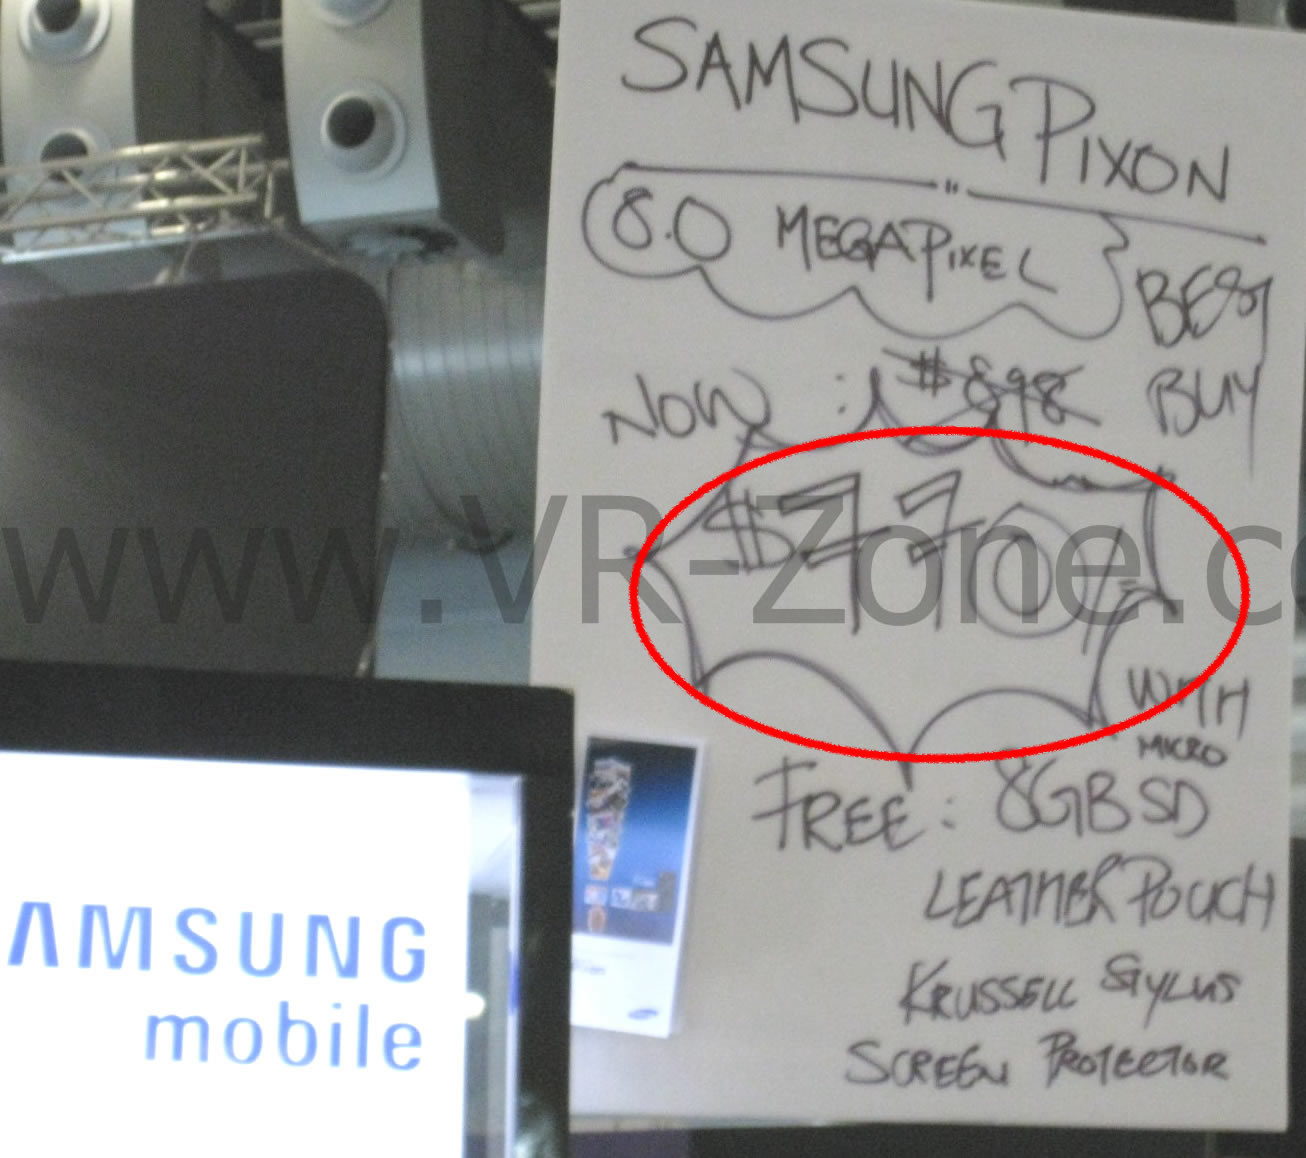 Sitex 2008 price list image brochure of (LAST DAY Deals) VR-Zone Samsung Pixon IMG 1731